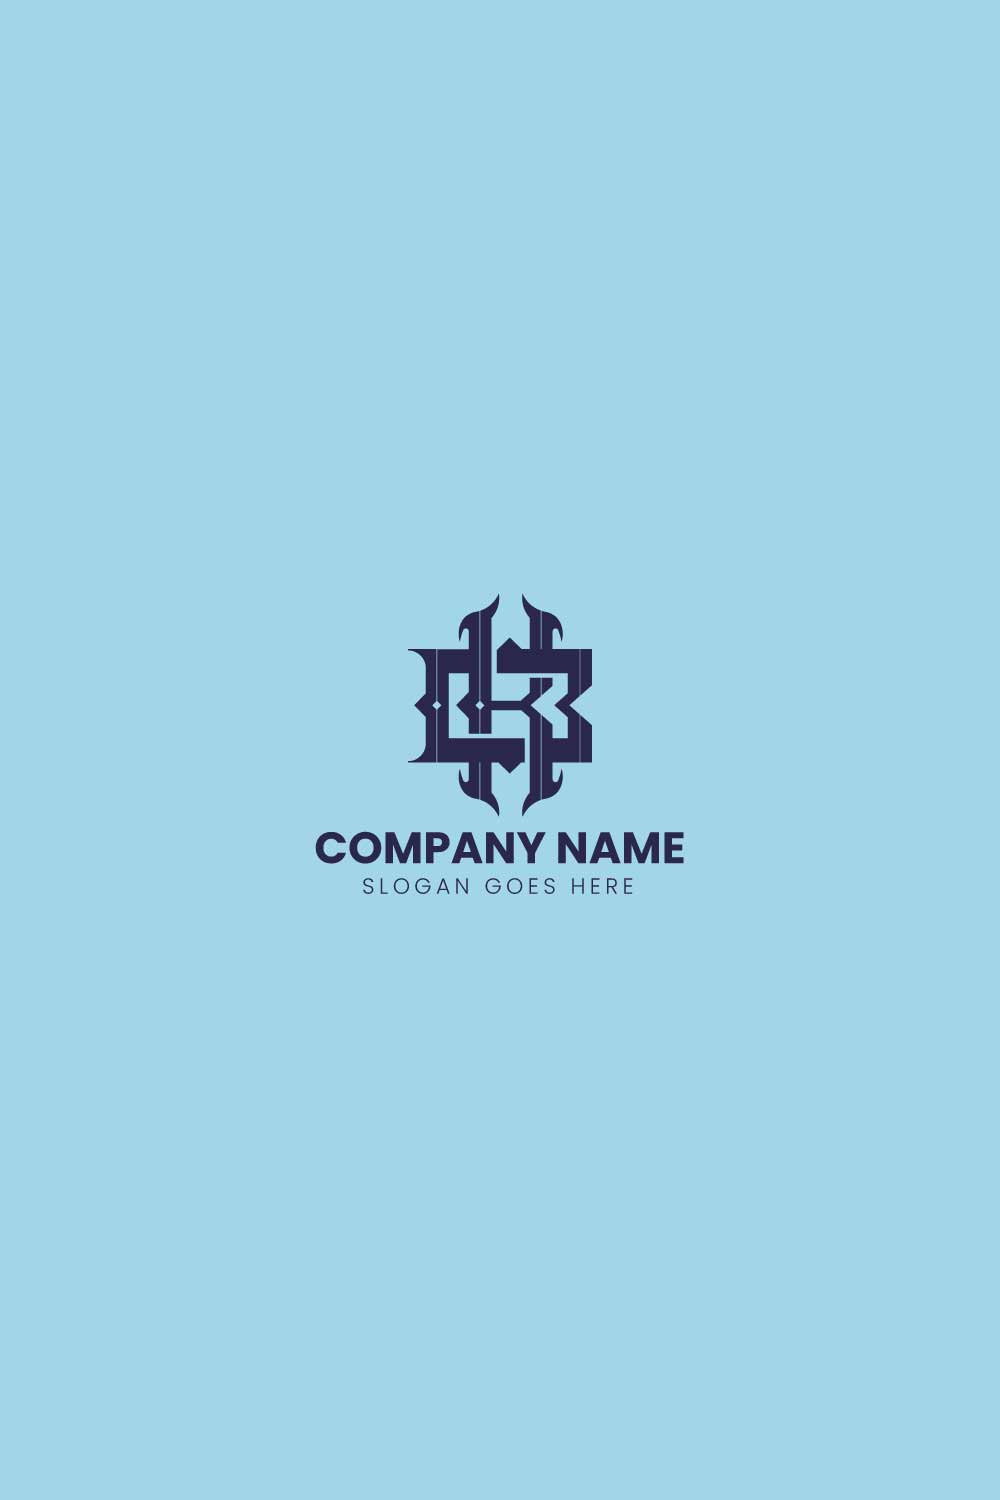 company name pint 387